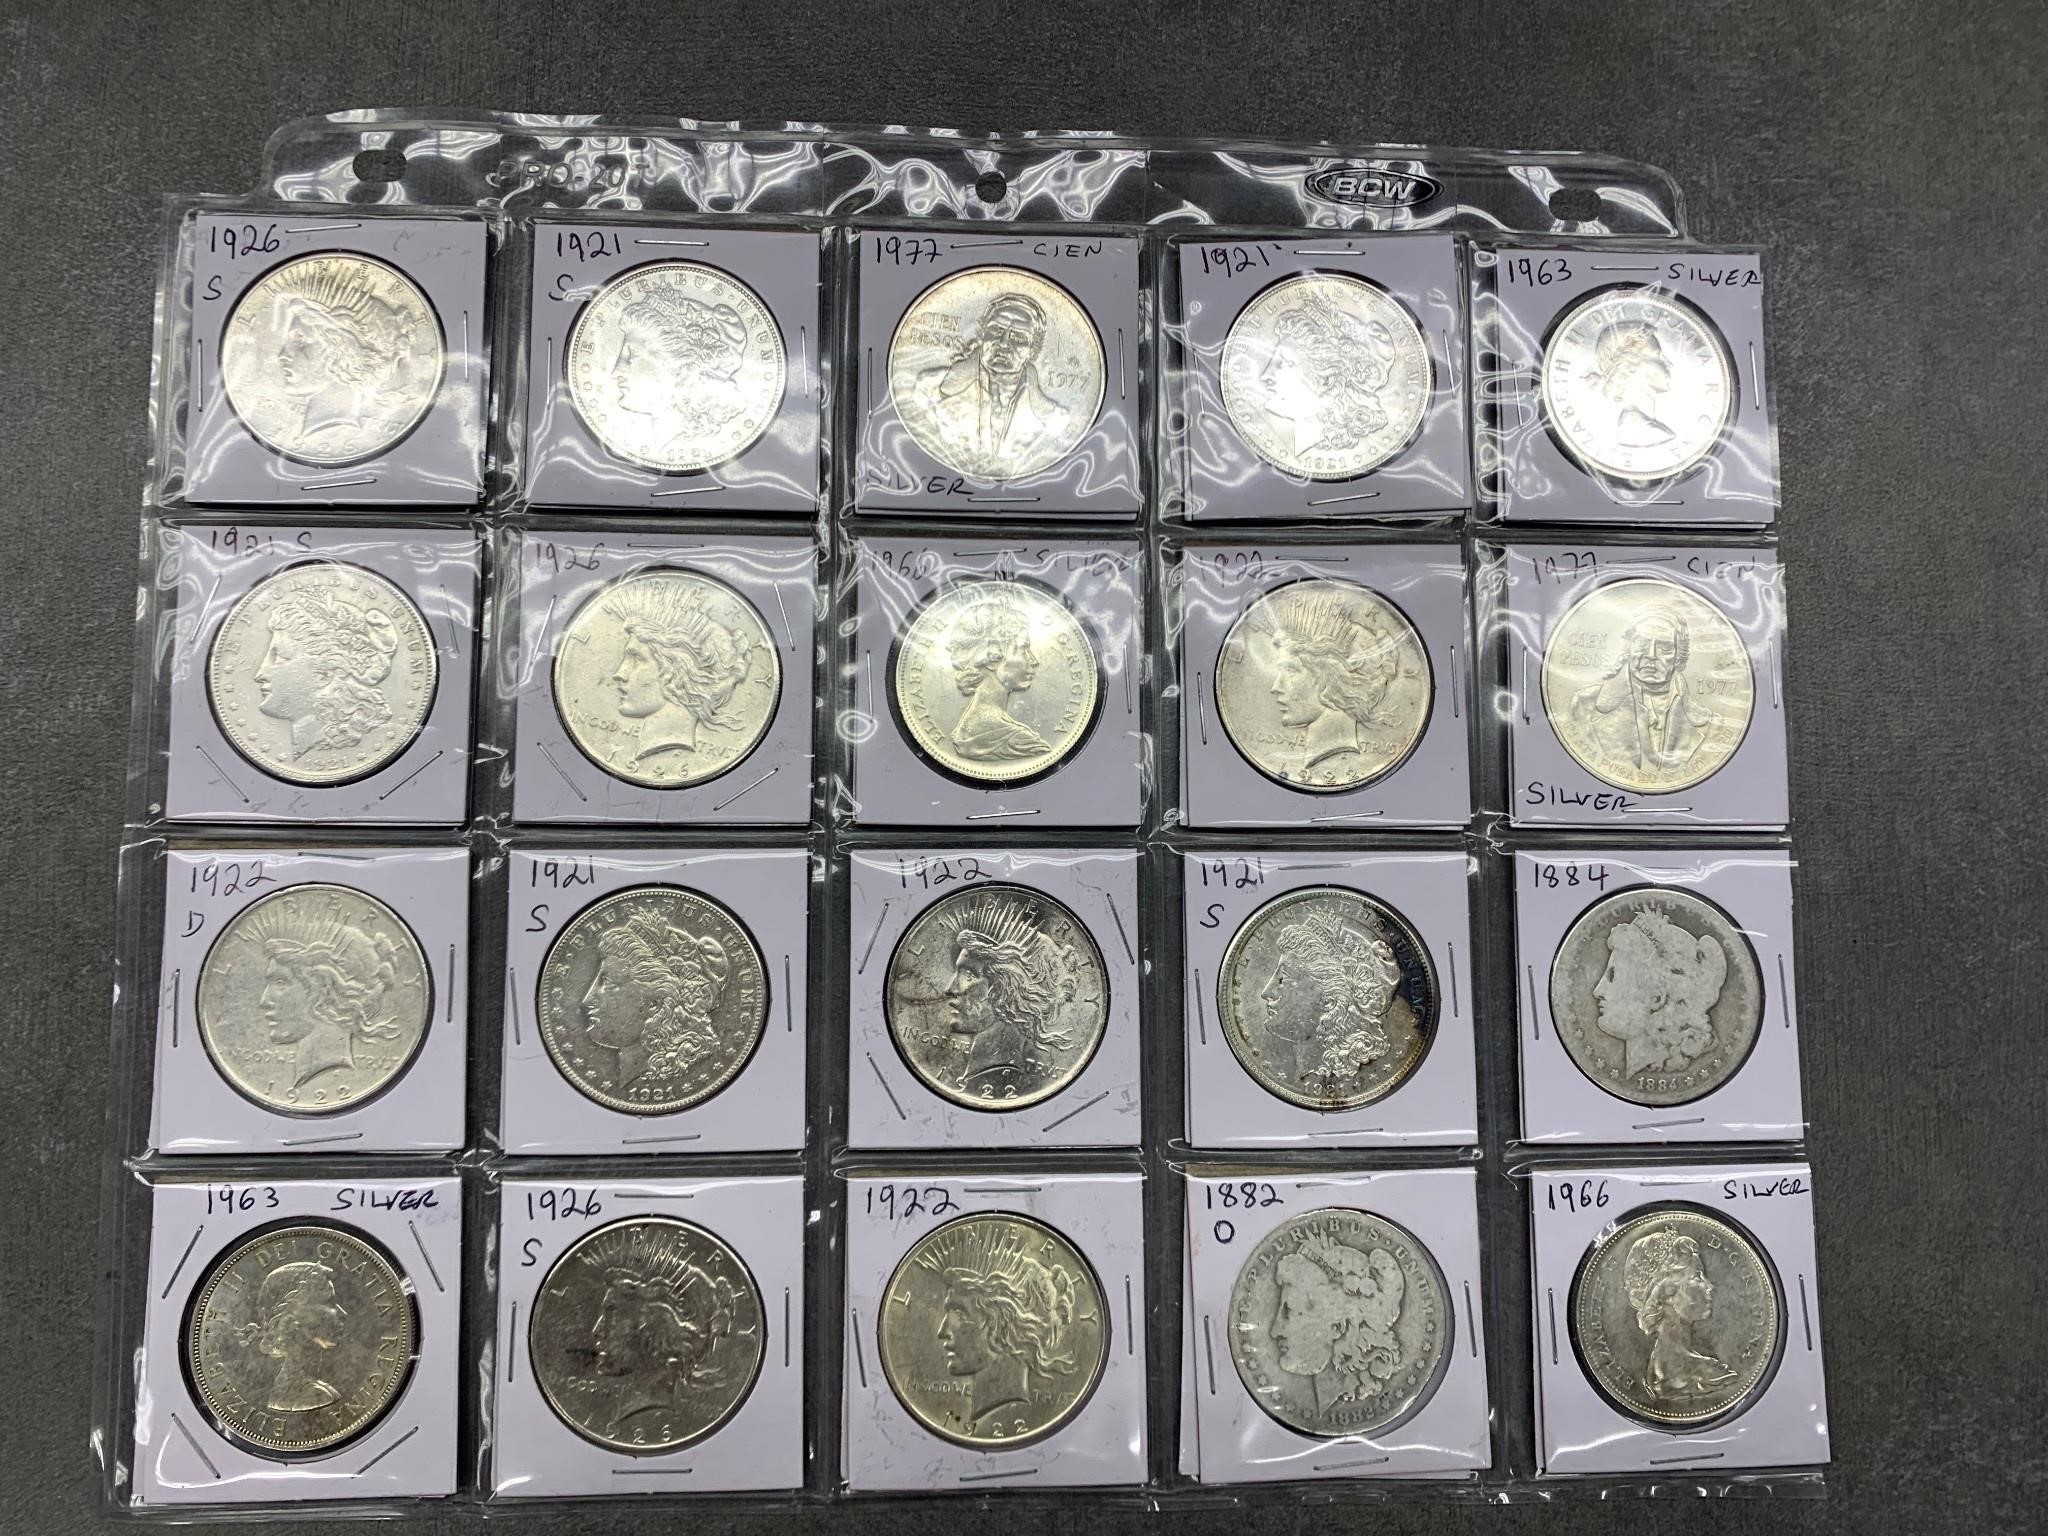 Silver Coins, Cien Pesos, Canadian Dollars